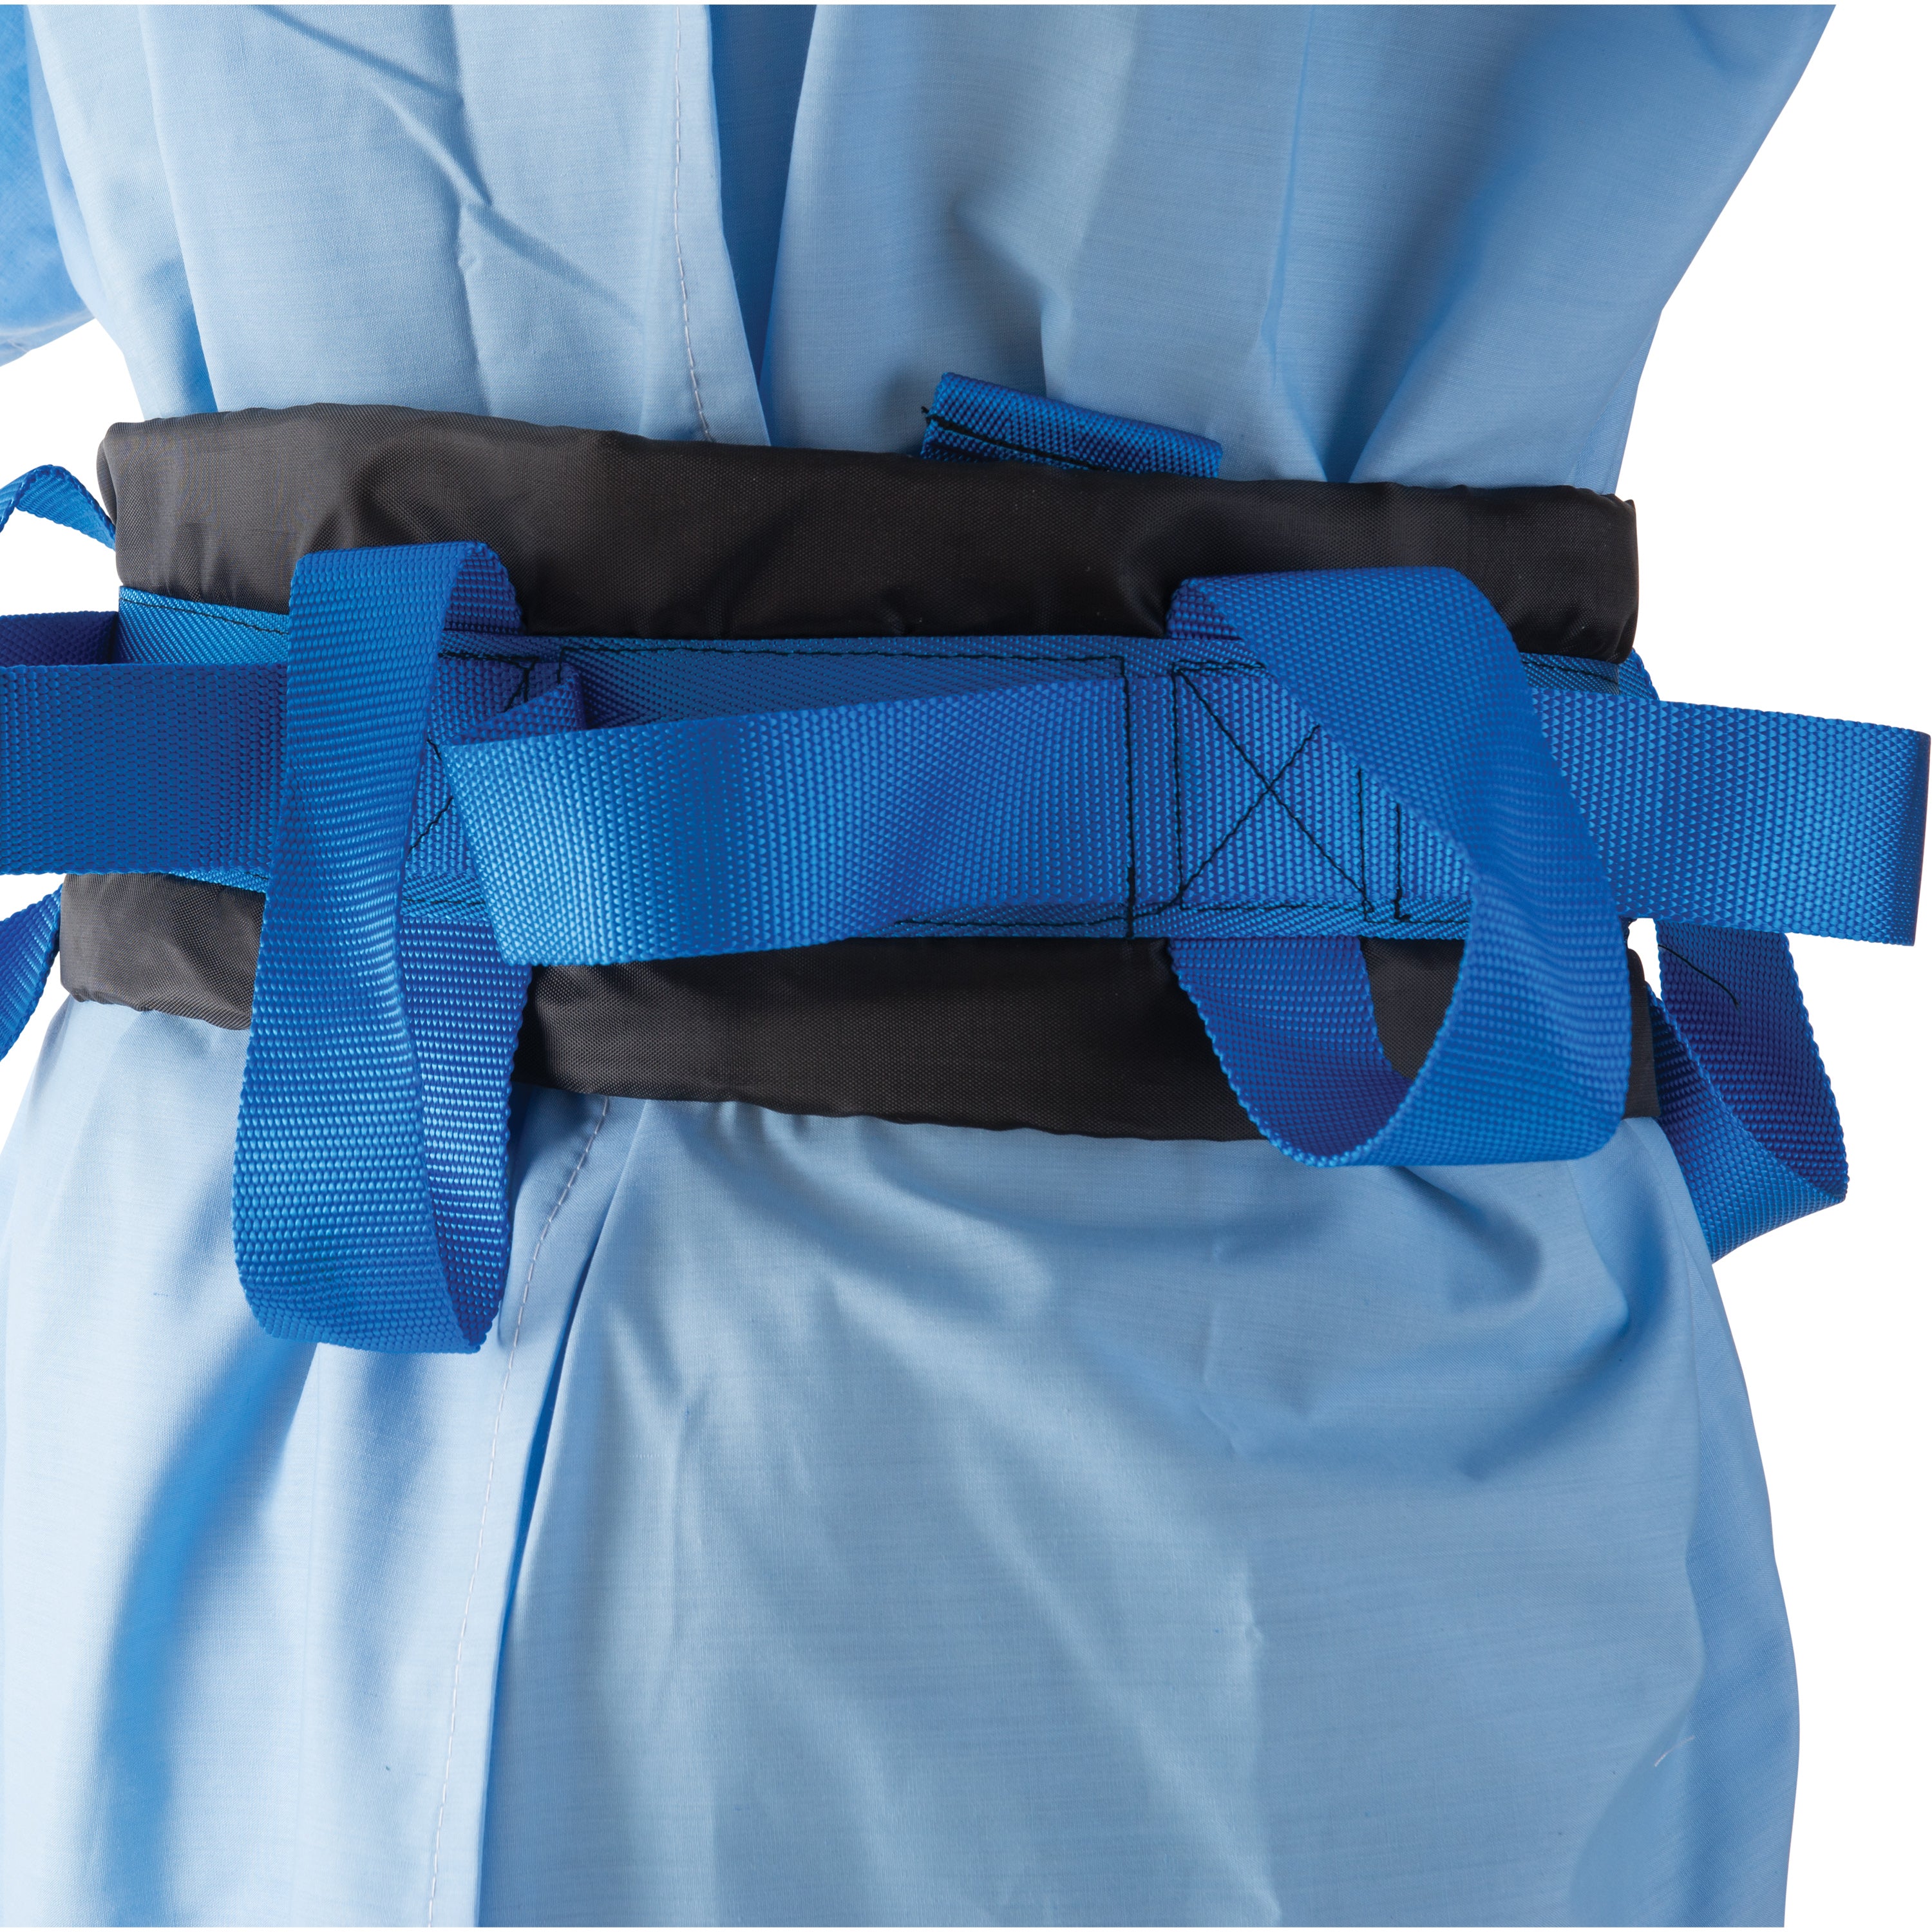 DMI Deluxe Adjustable Nylon Transfer Gait Belt with Buckle AM-533-6030-2122